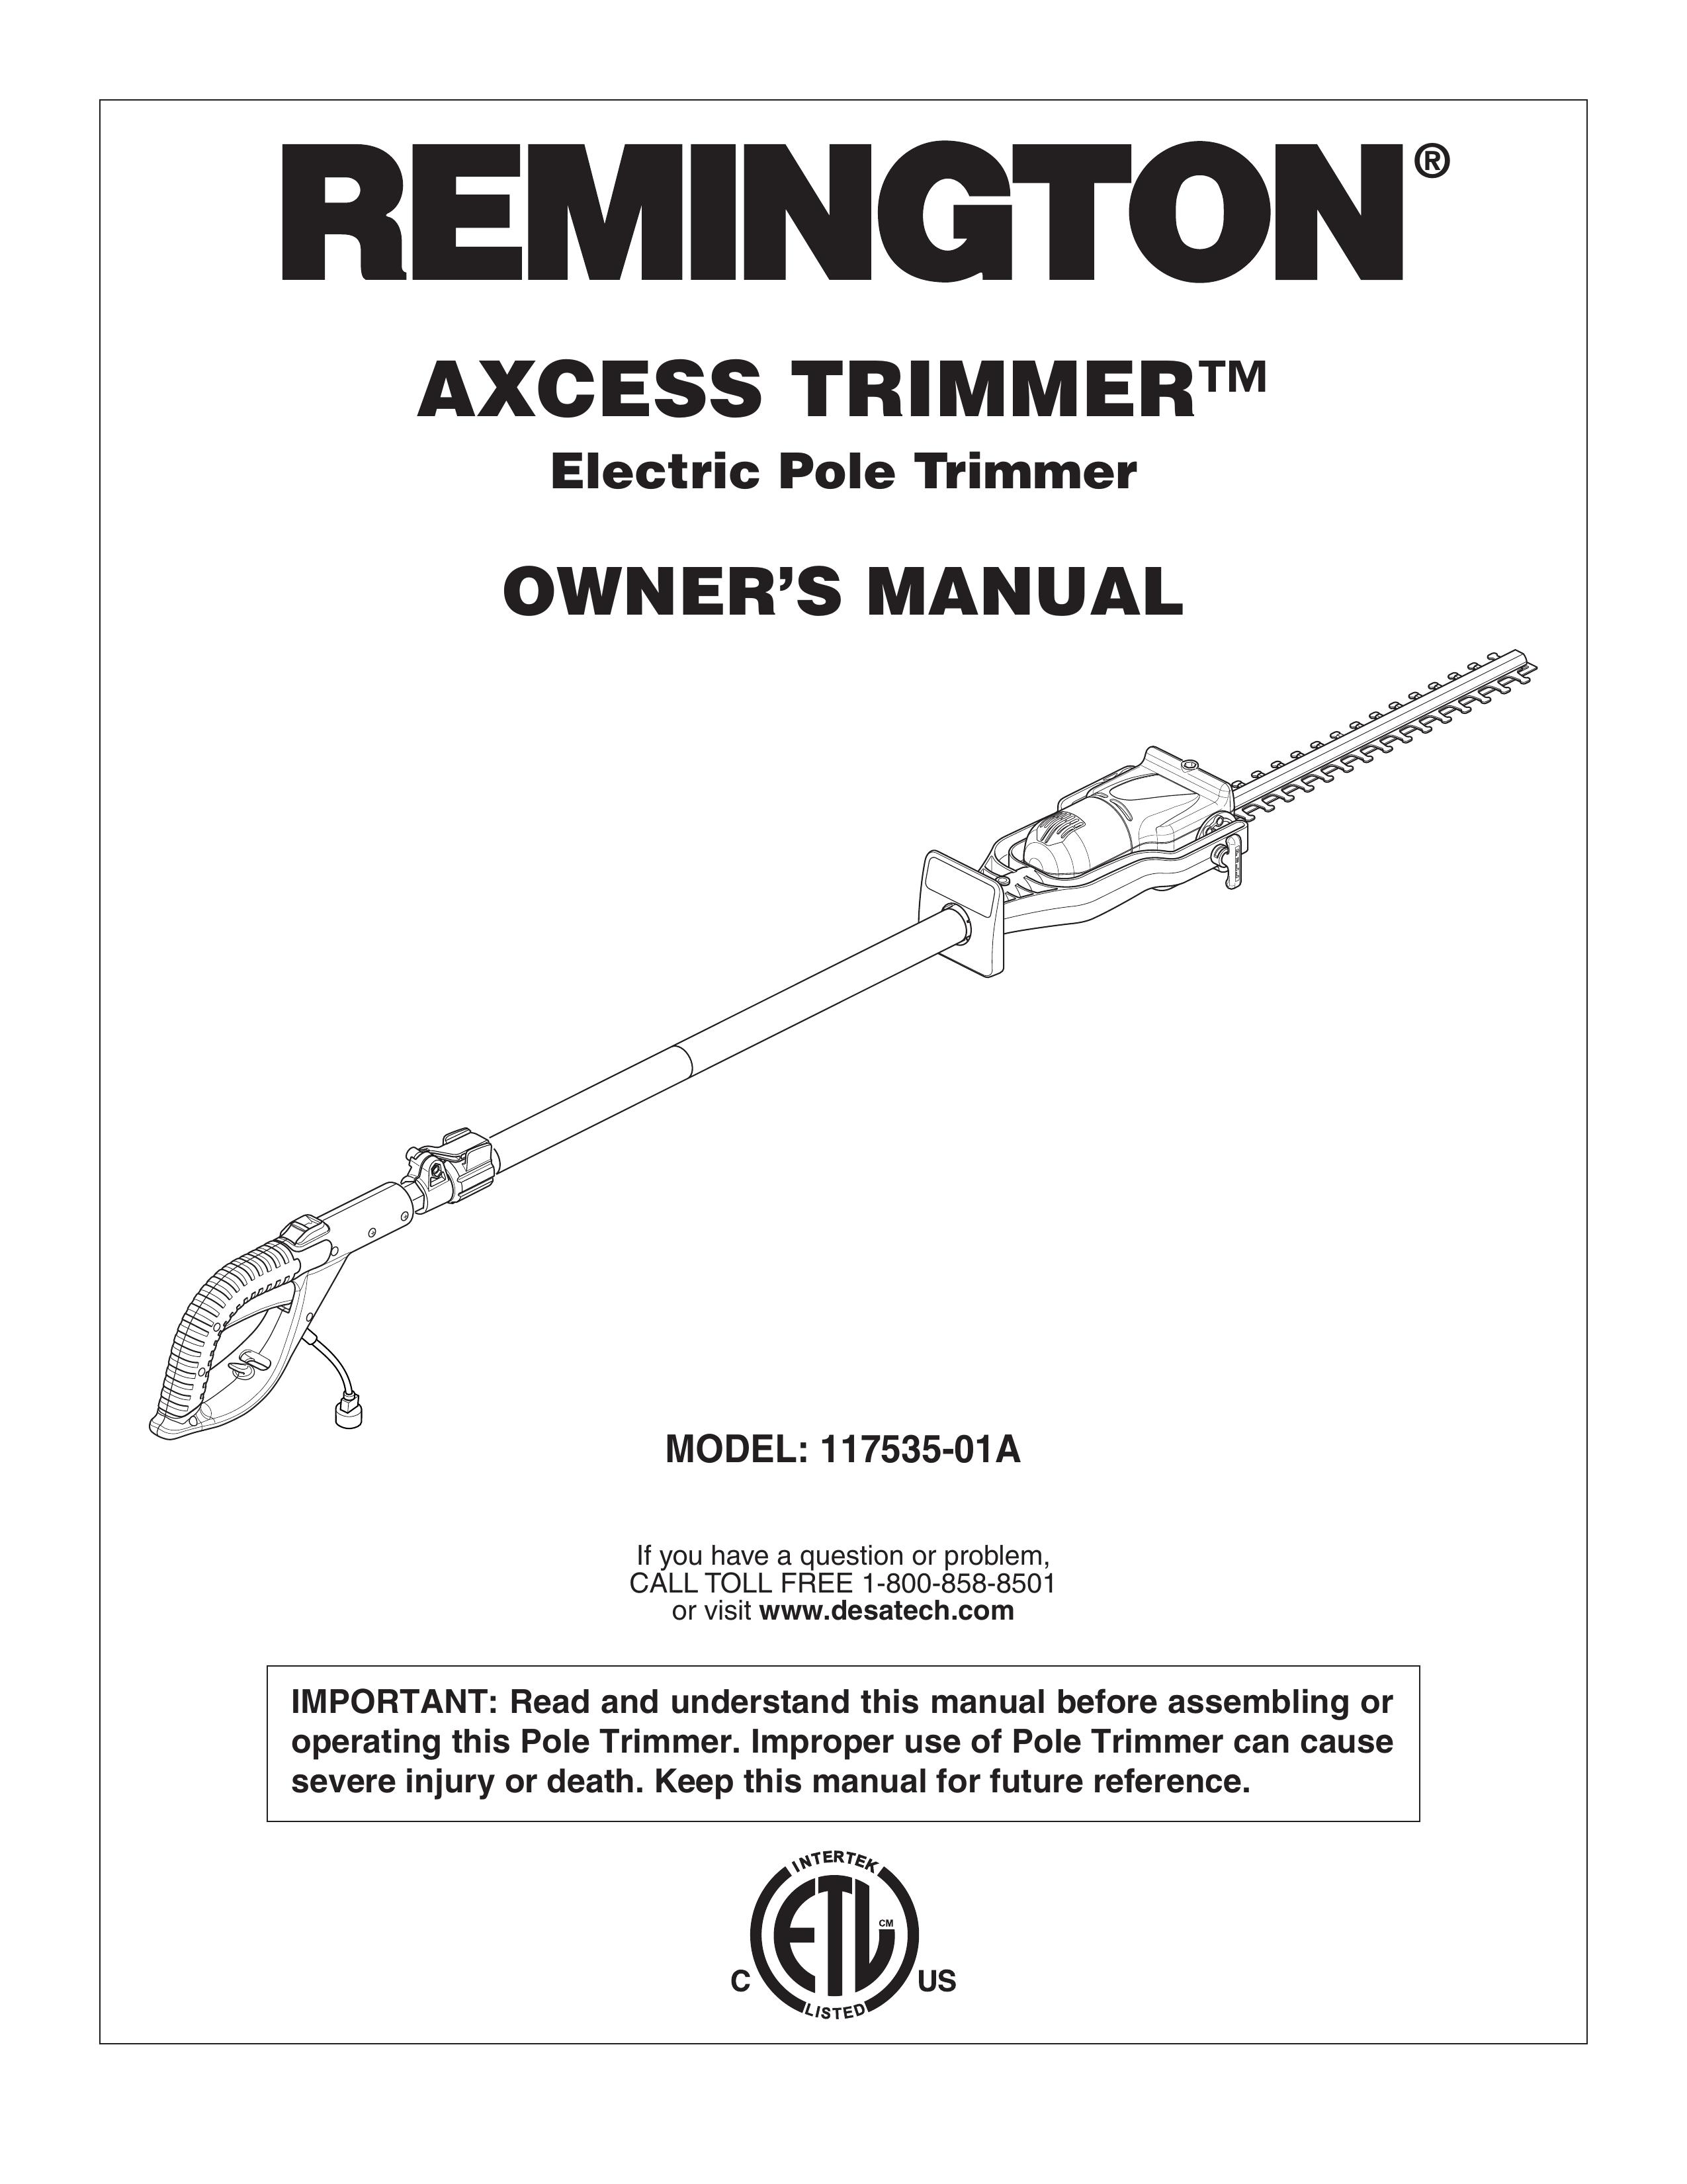 Remington 117535-01A Trimmer User Manual